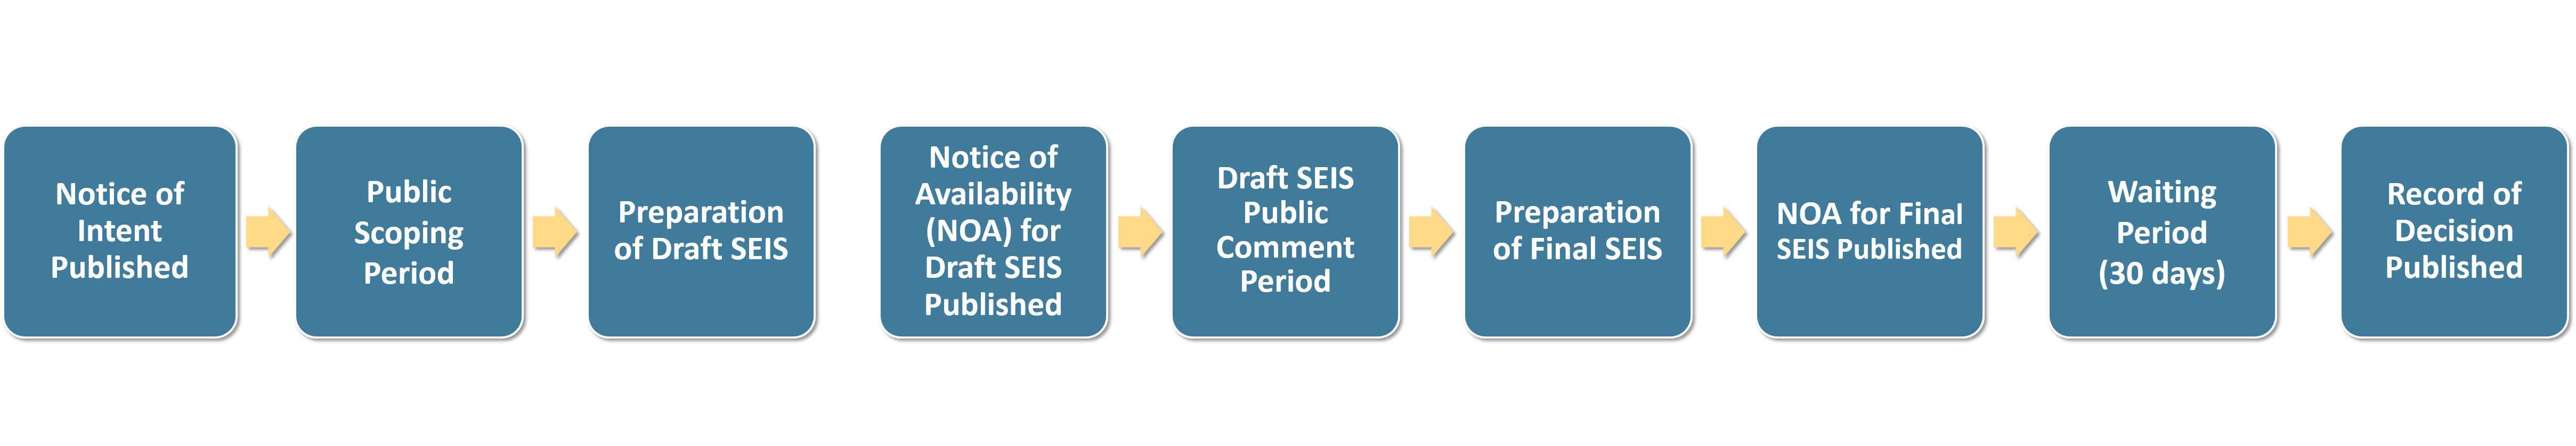 SEIS process timeline